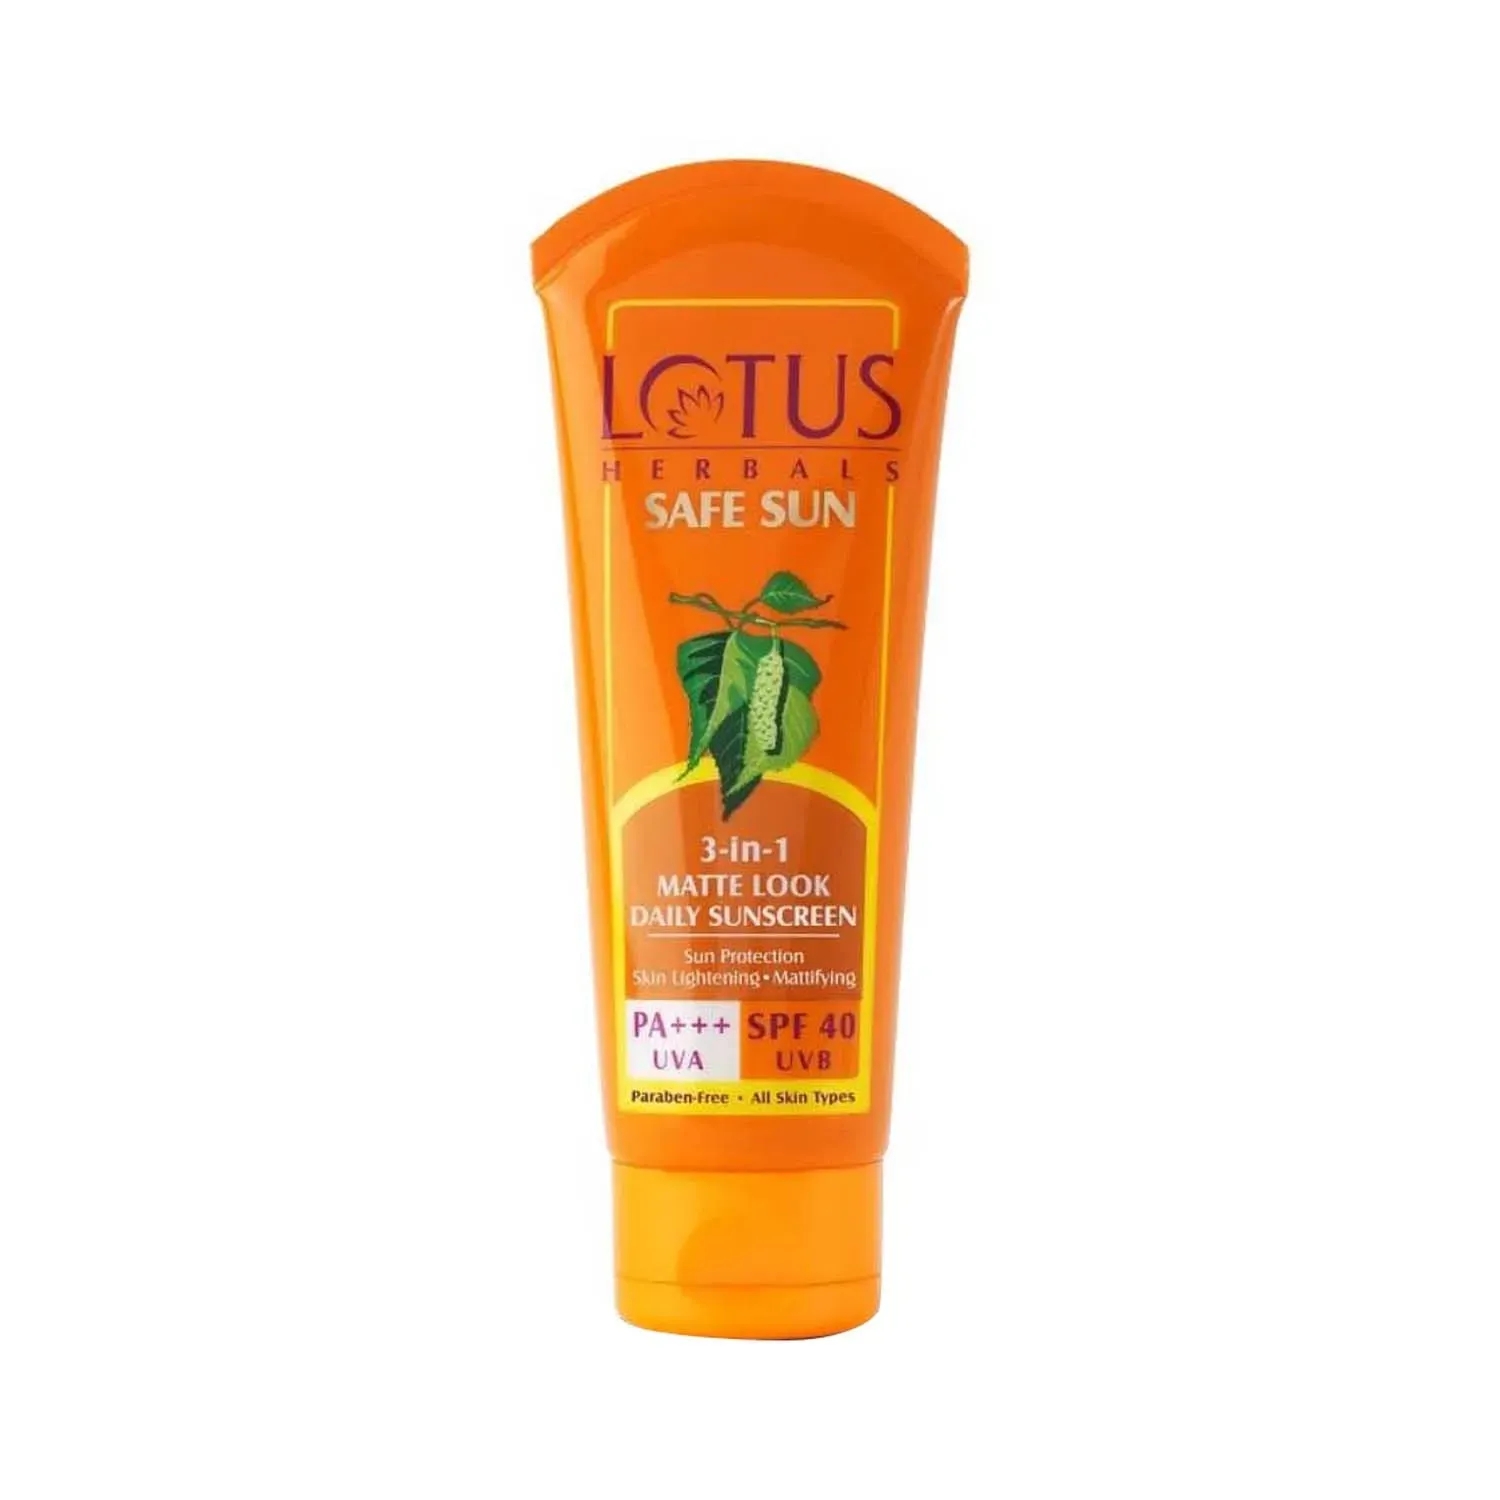 Lotus | Lotus Herbals Safe Sun 3 In 1 Matte Look Daily Sunblock SPF 40 Sunscreen - (100g)